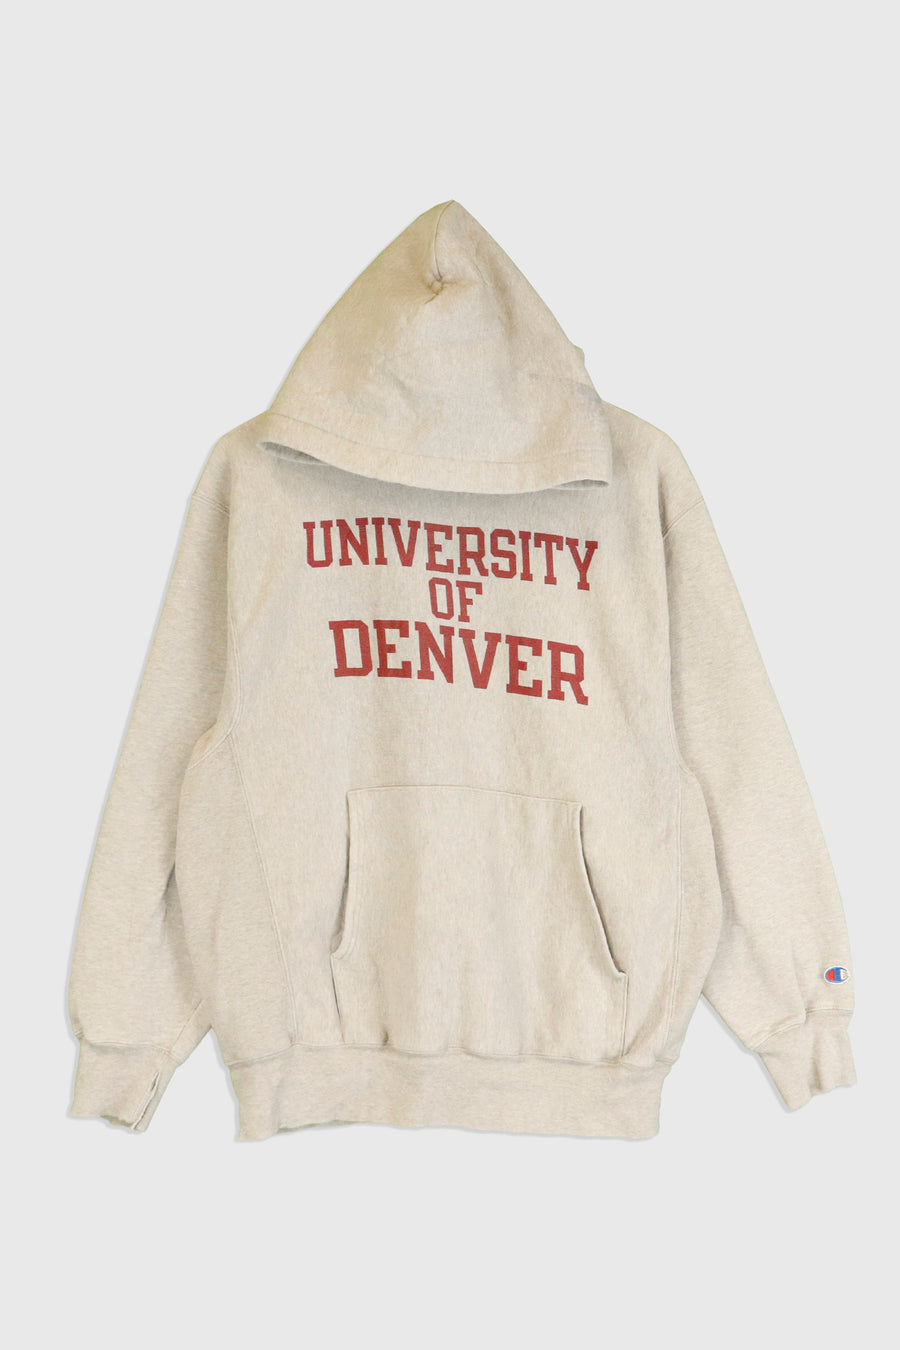 Vintage Champion University Of Denver Block Letter Sweatshirt Sz M